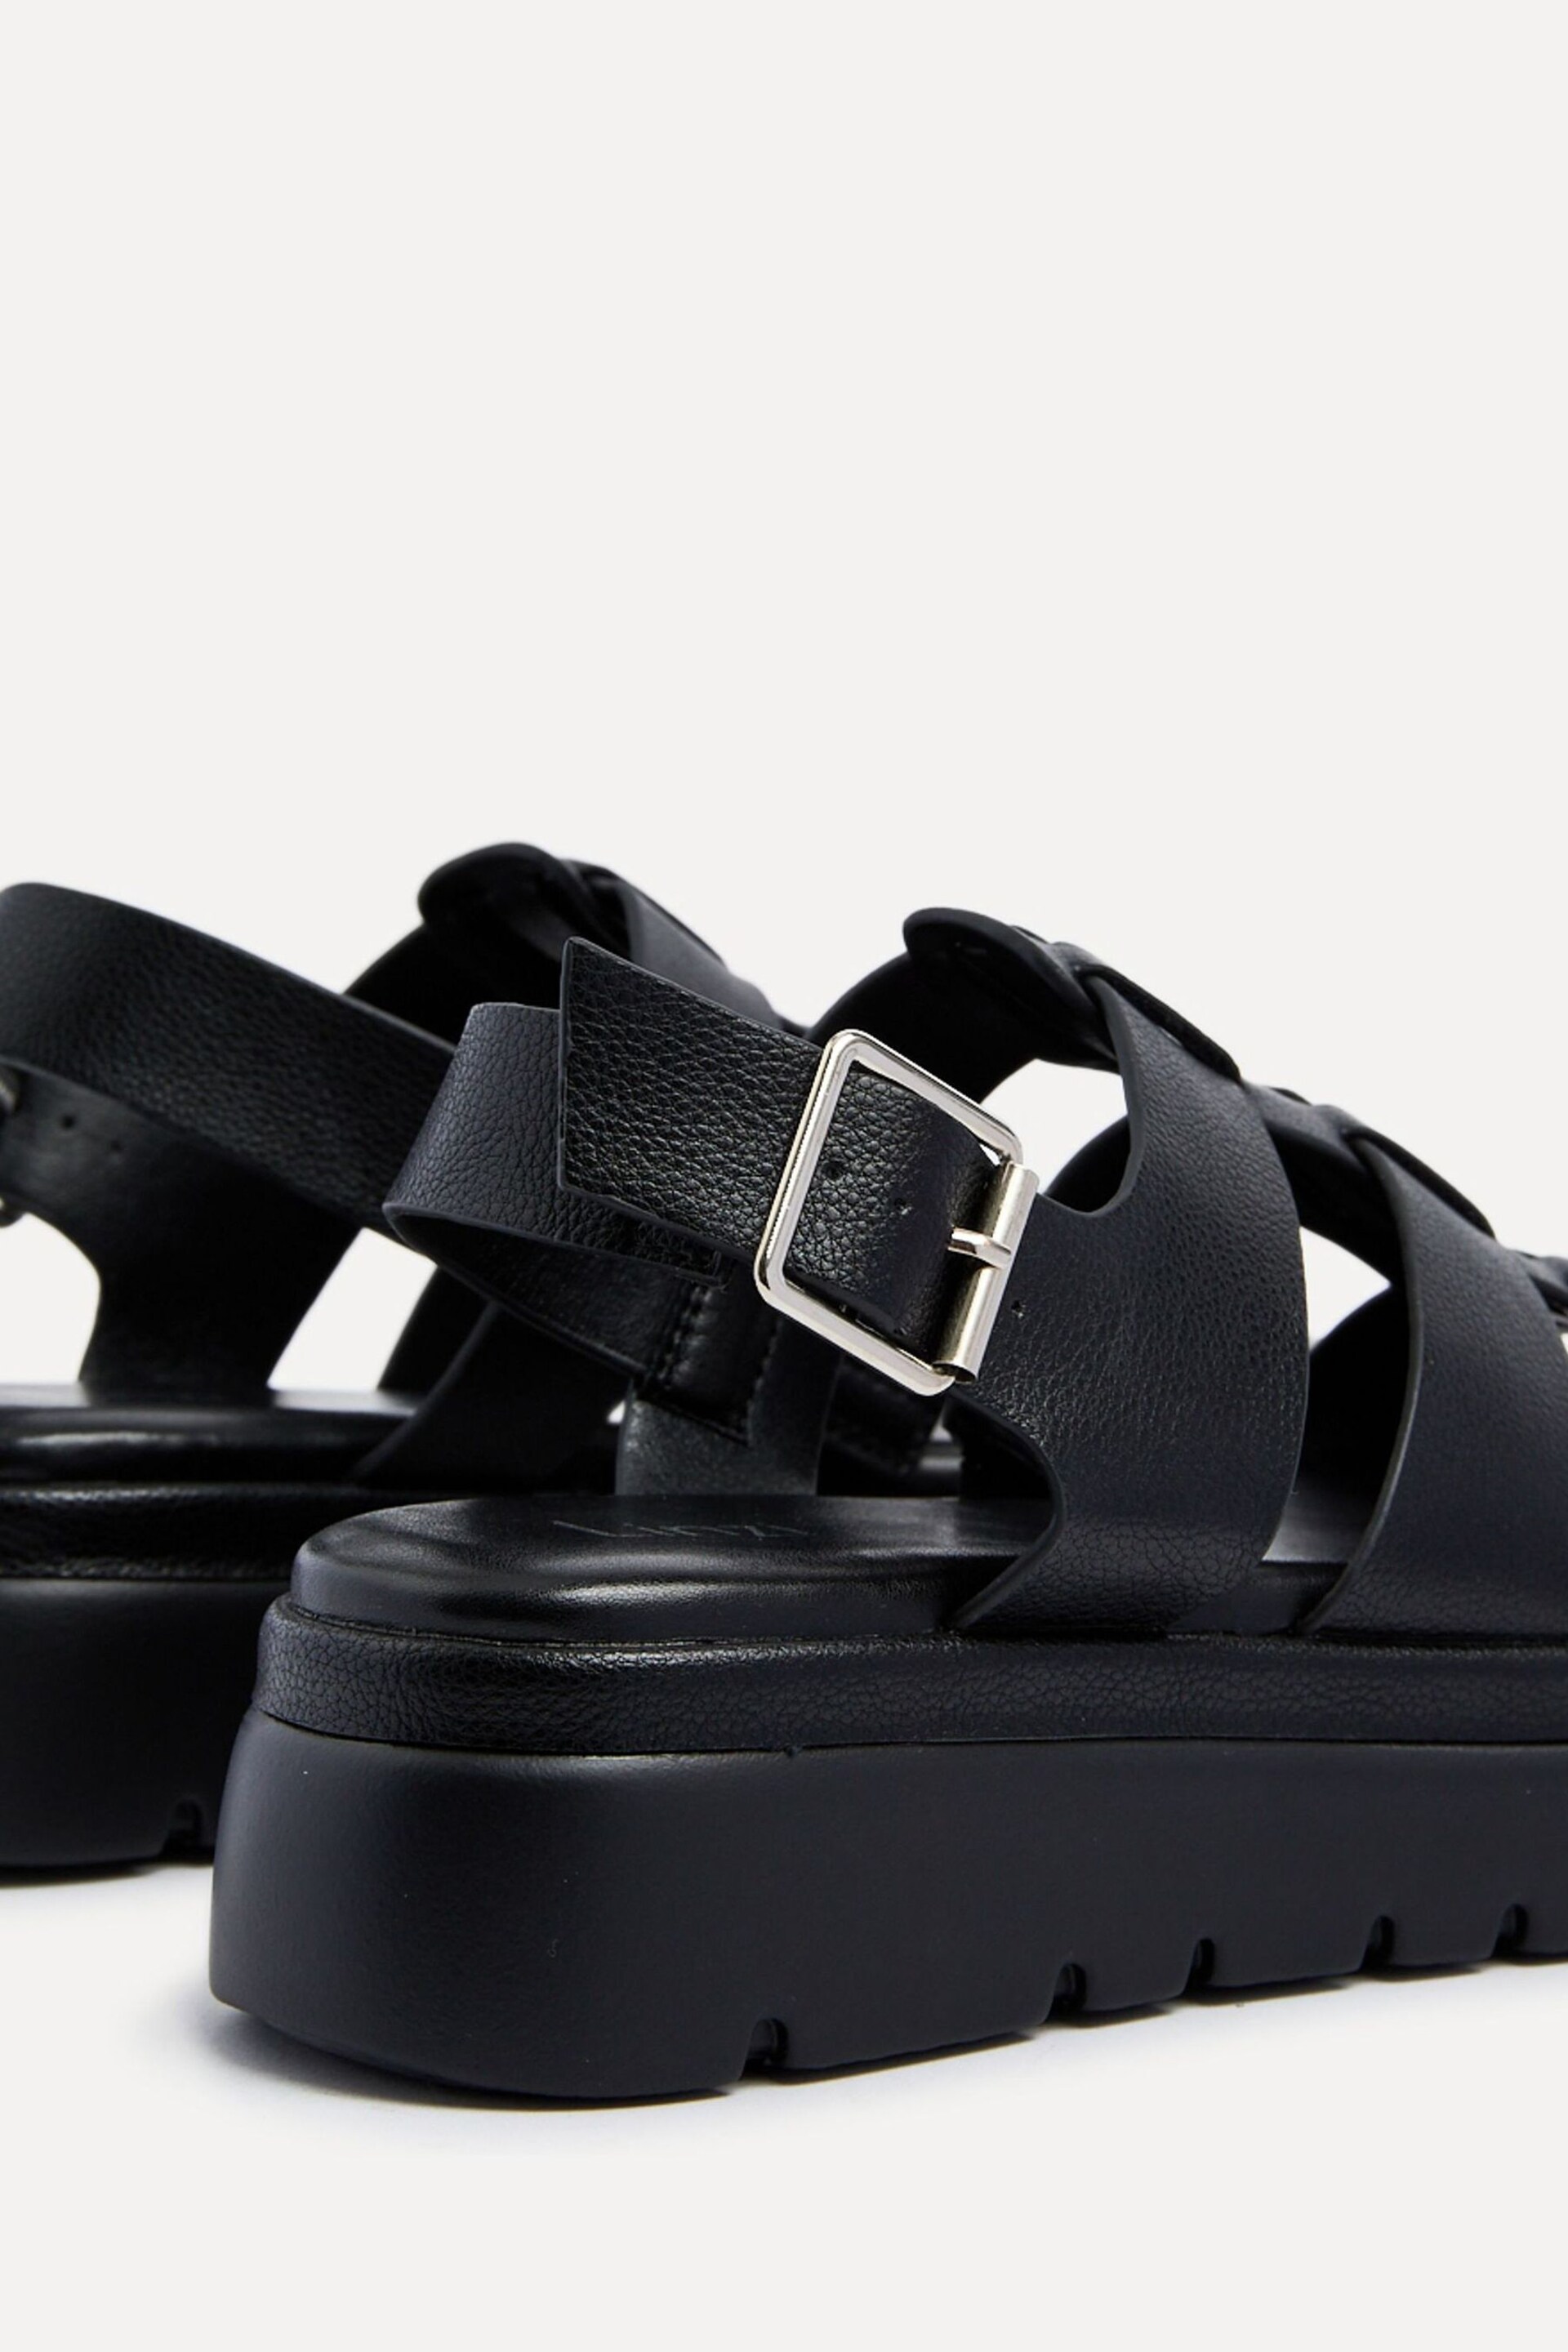 Linzi Black Boston Slingback Gladiator Sandals - Image 5 of 5